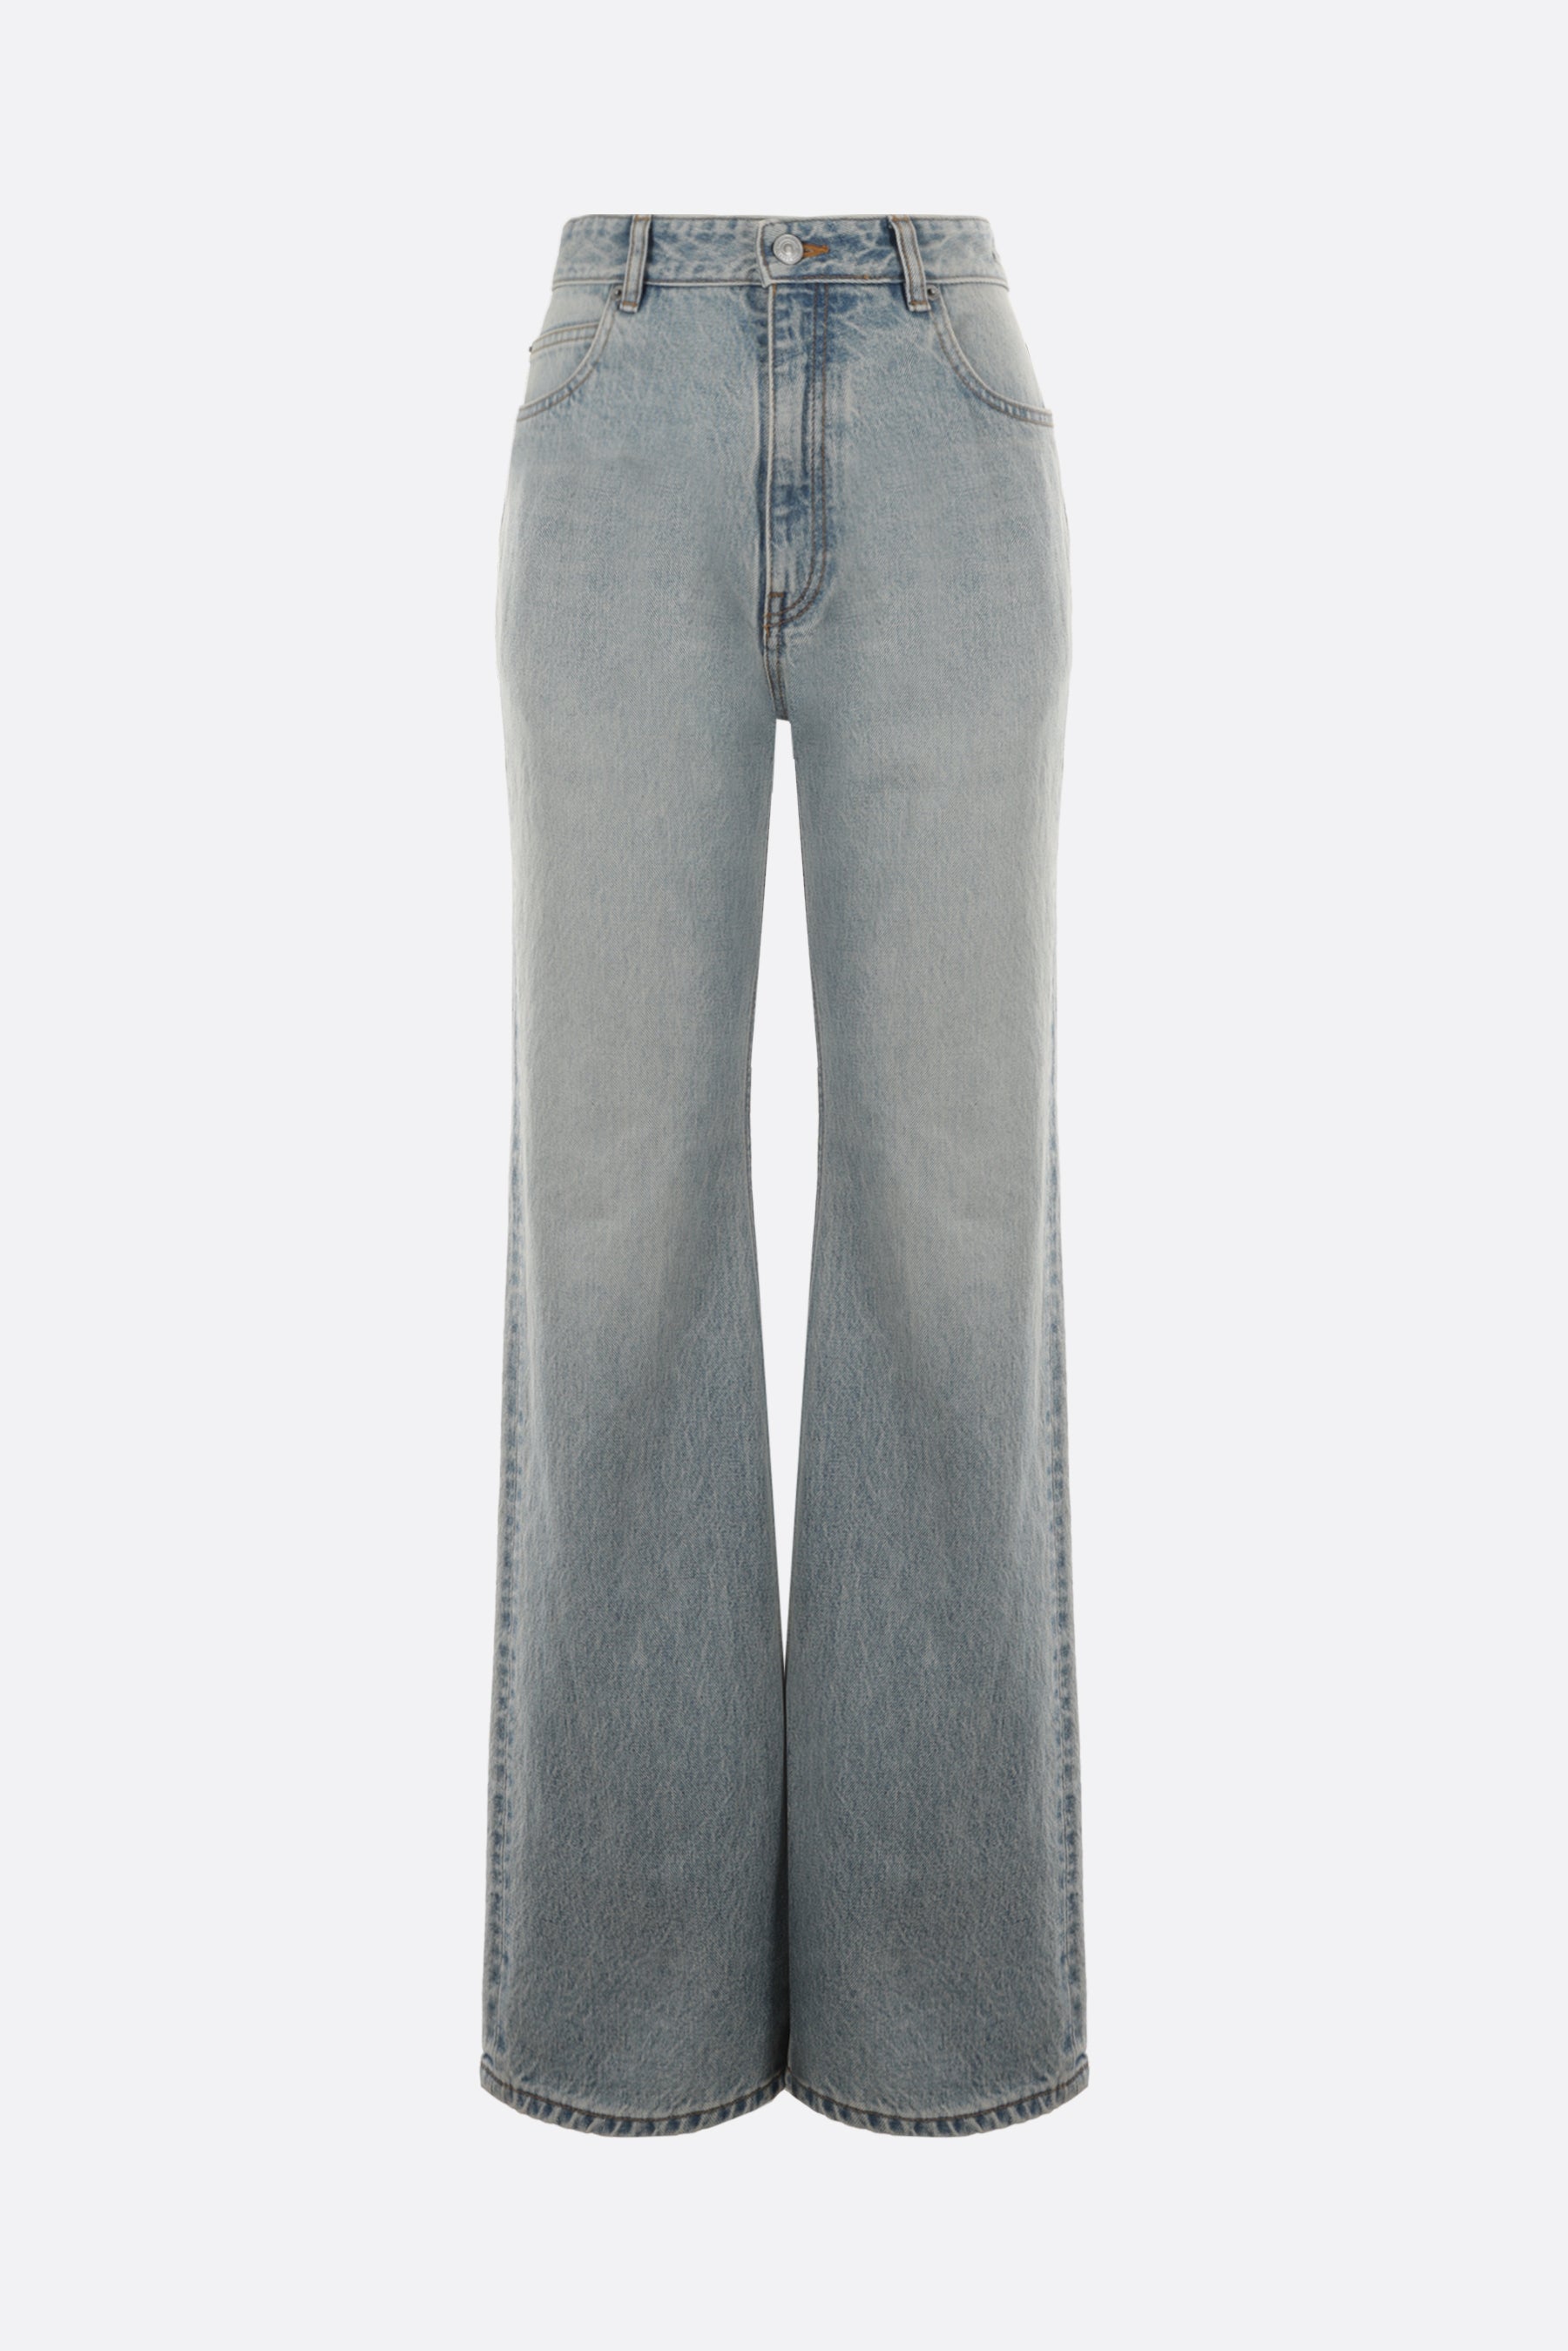 japanese denim flared jeans